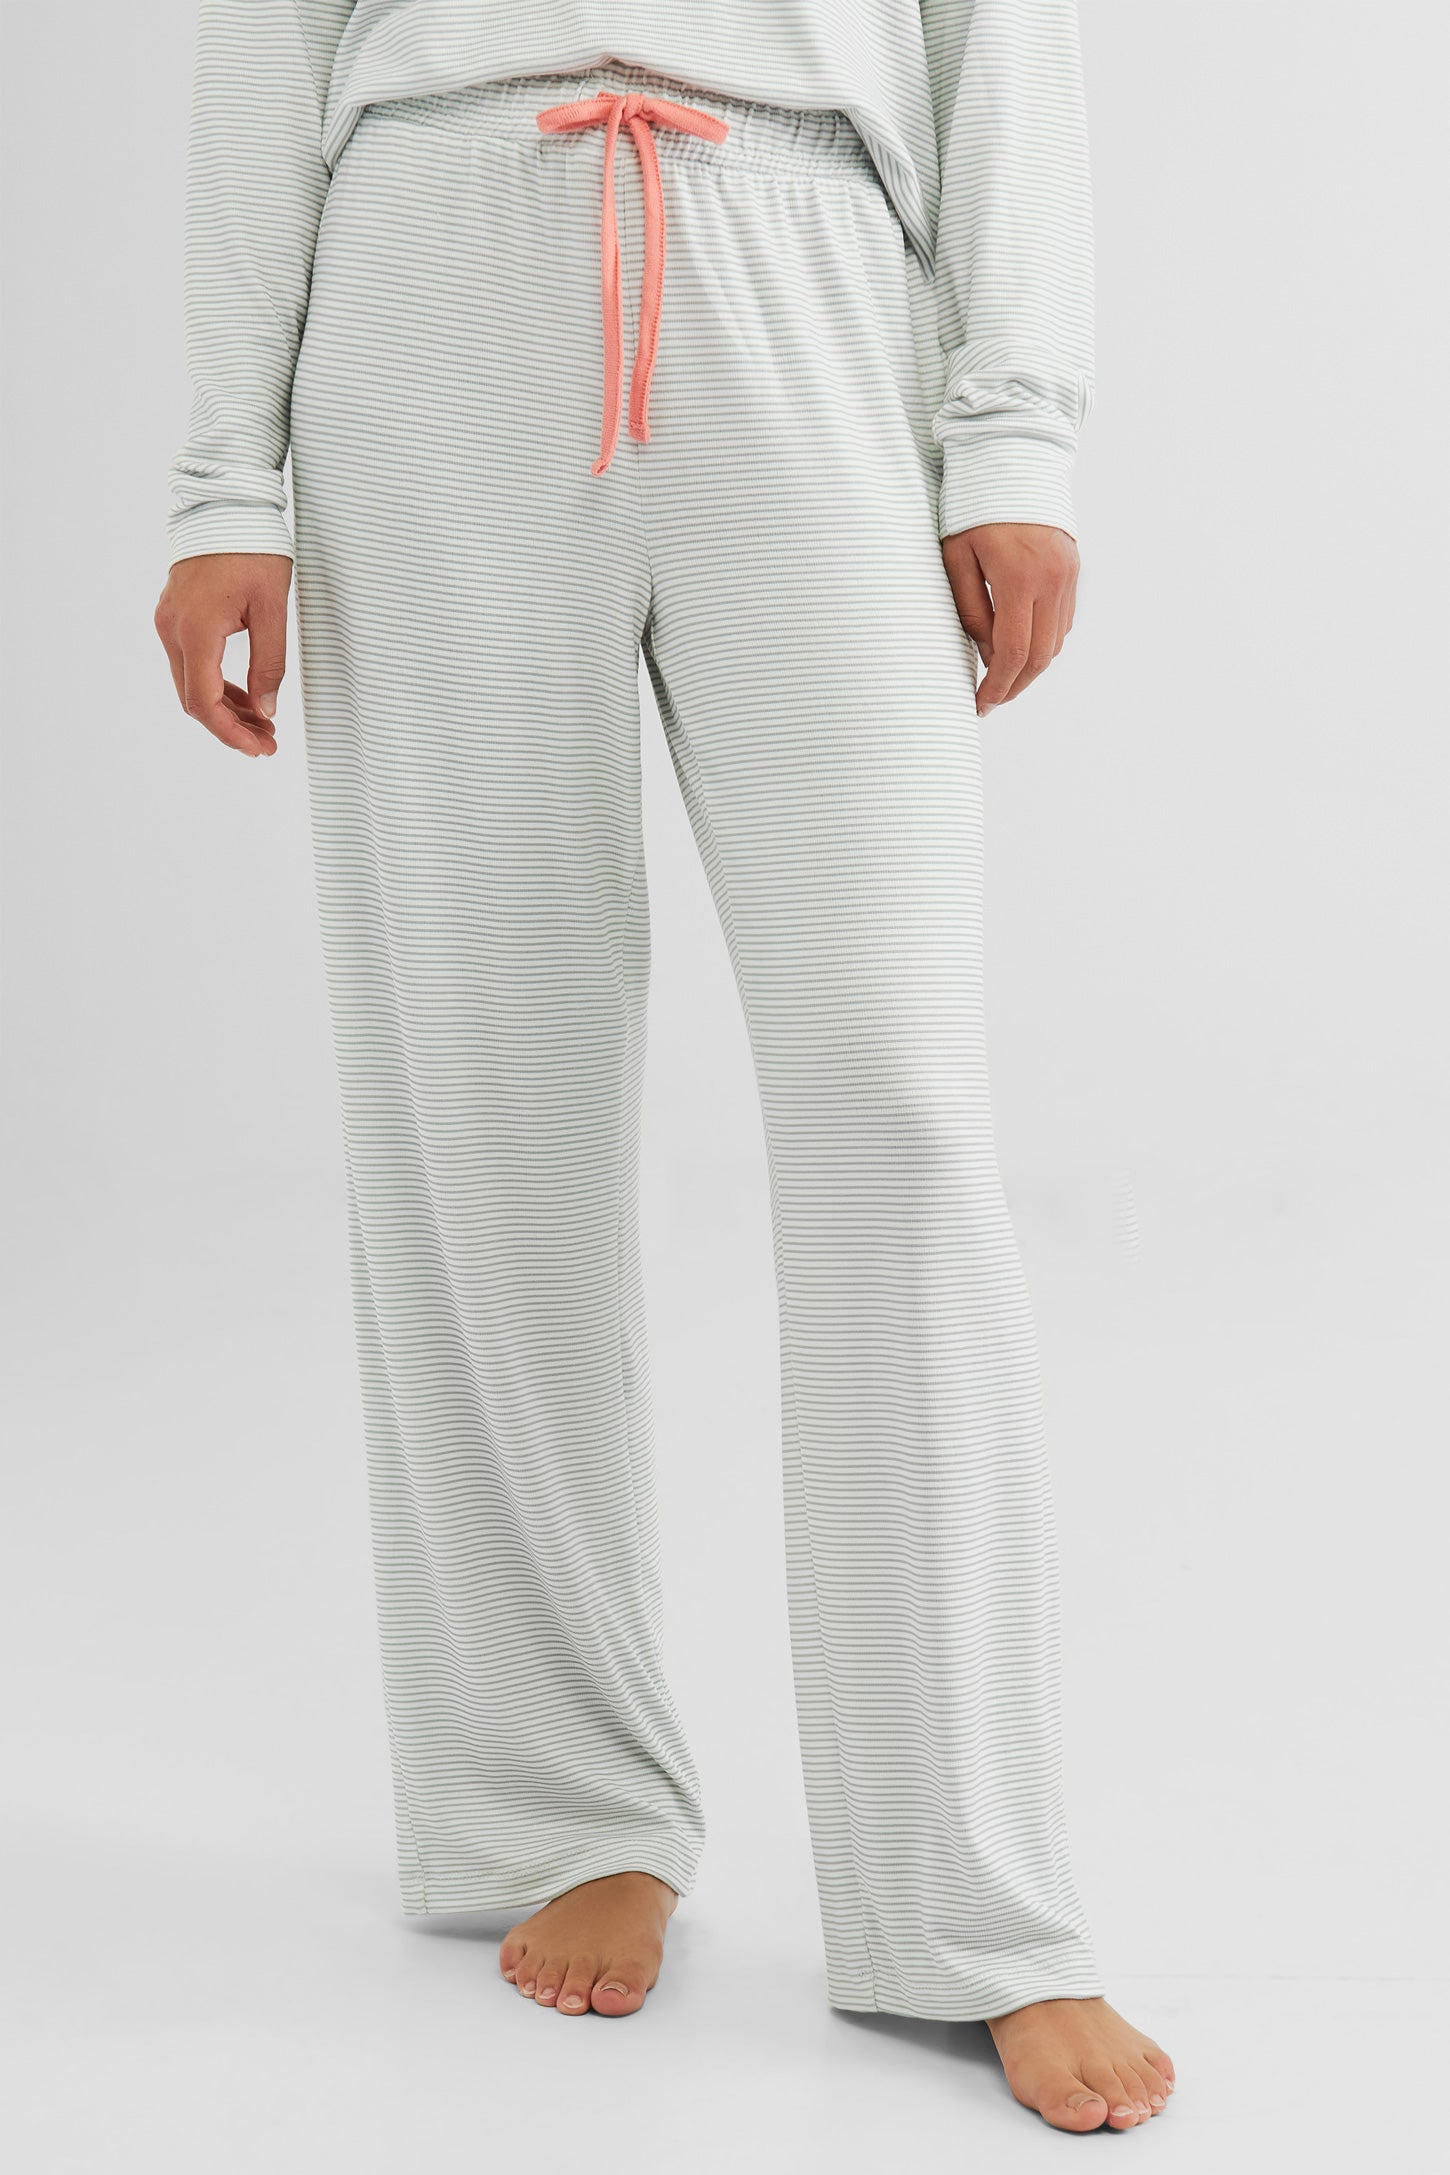 Pantalon pyjama gaucho - Femme && BLANC/GRIS